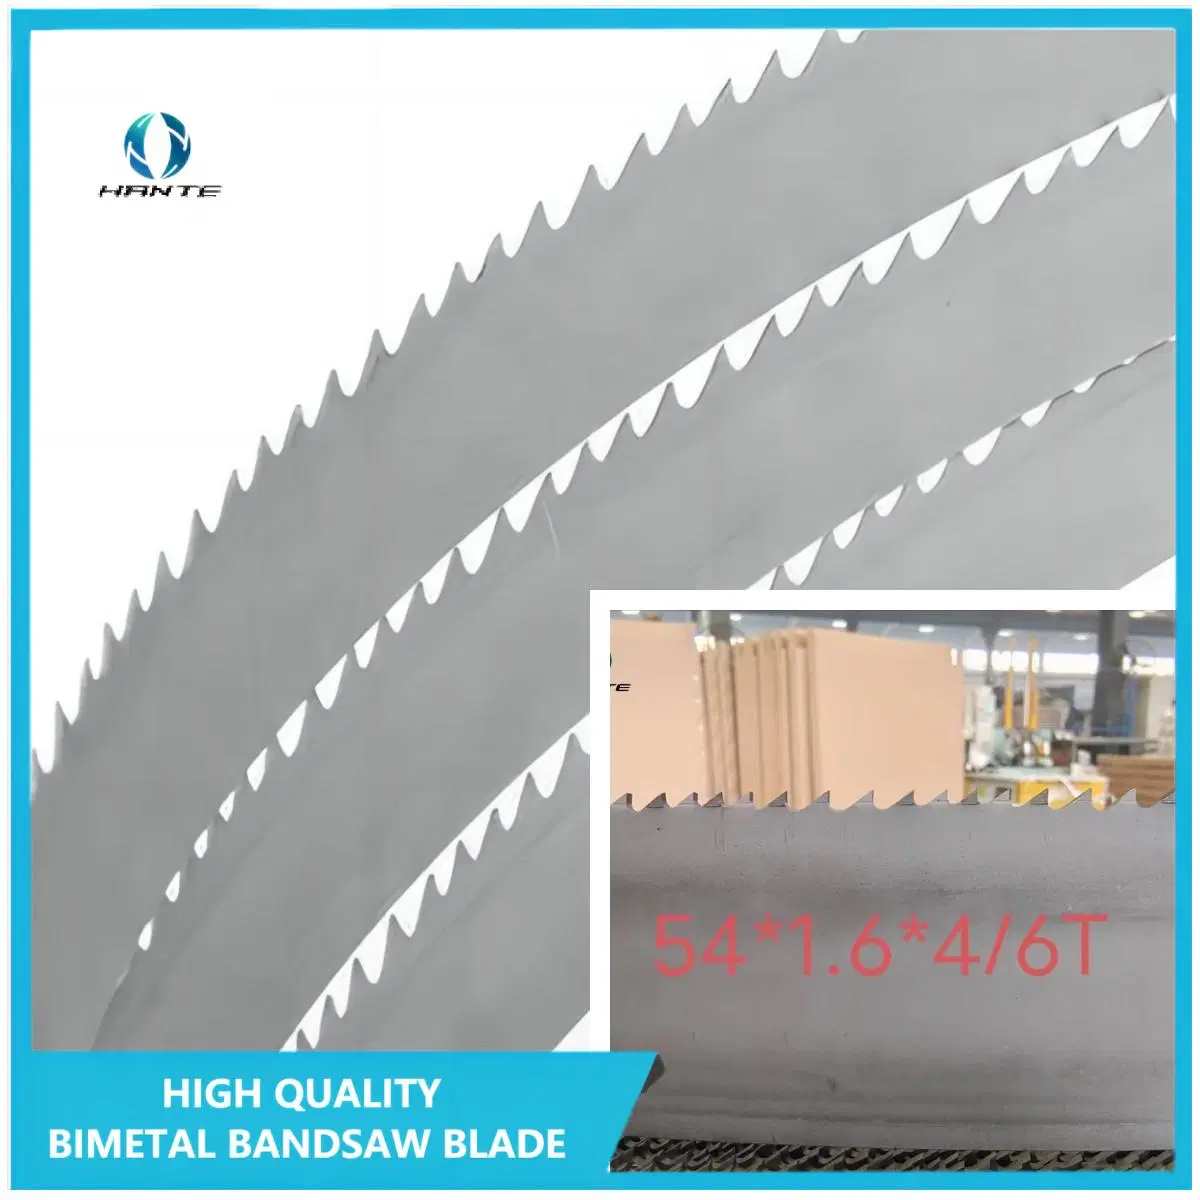 54 * 1,6 * 4/6 hohe Qualität Leistung Bimetall Bandsägeblatt / Bandsägeblätter für Aluminium-SchneideEdelstahl·HSS-Klingen